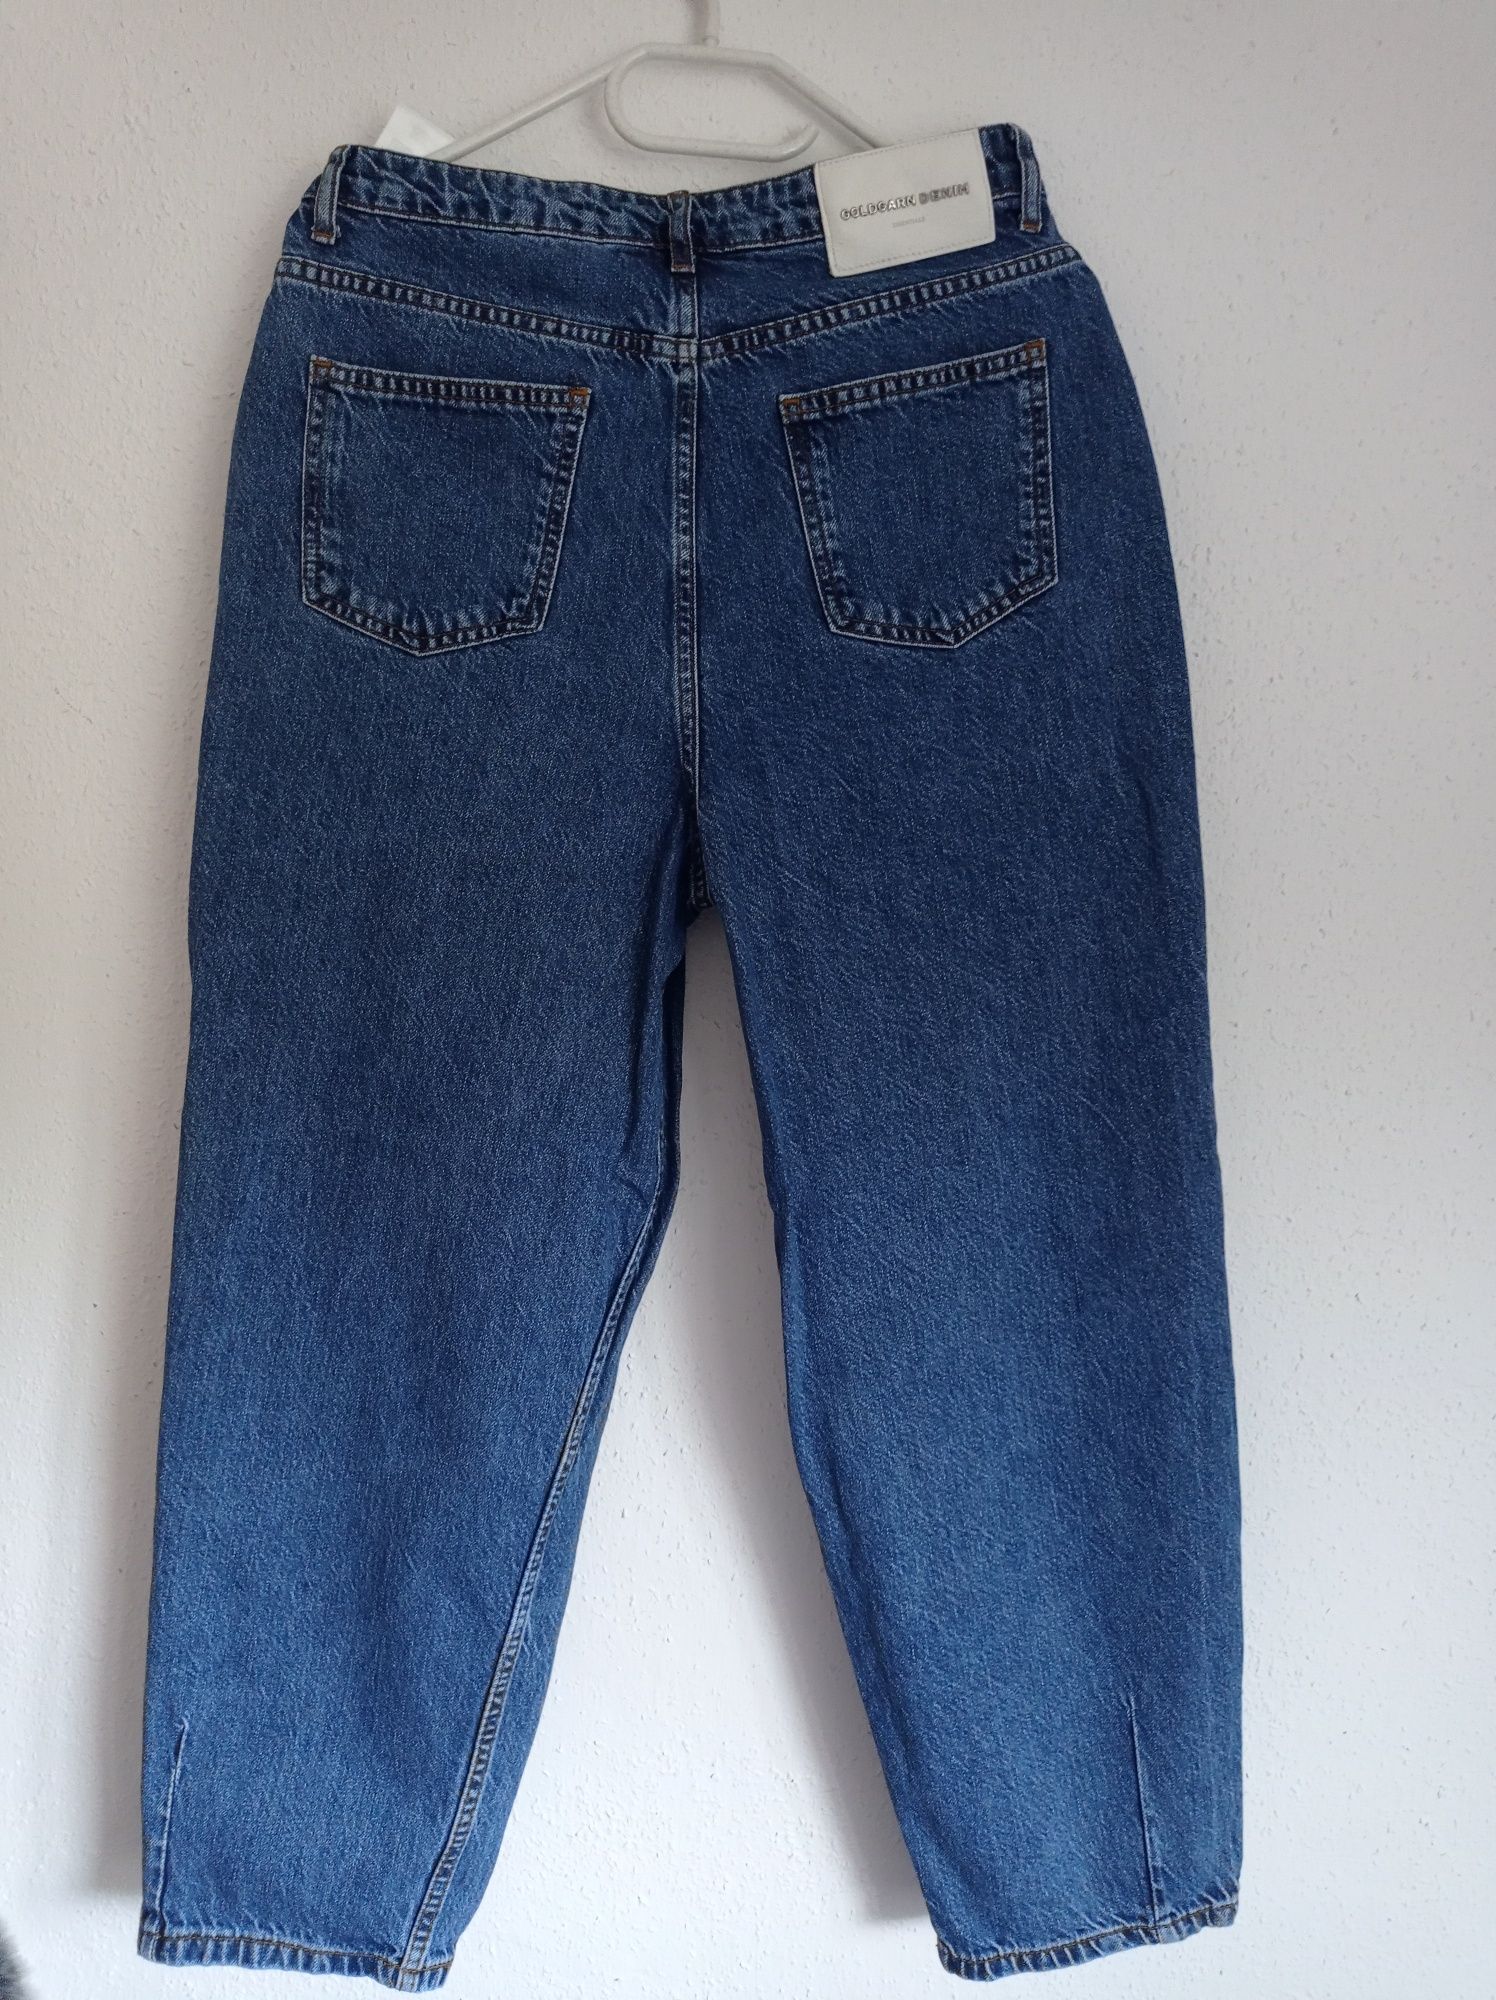 Ostateczna cena!!!Oryginalne jeansy damskie Goldgarn denim